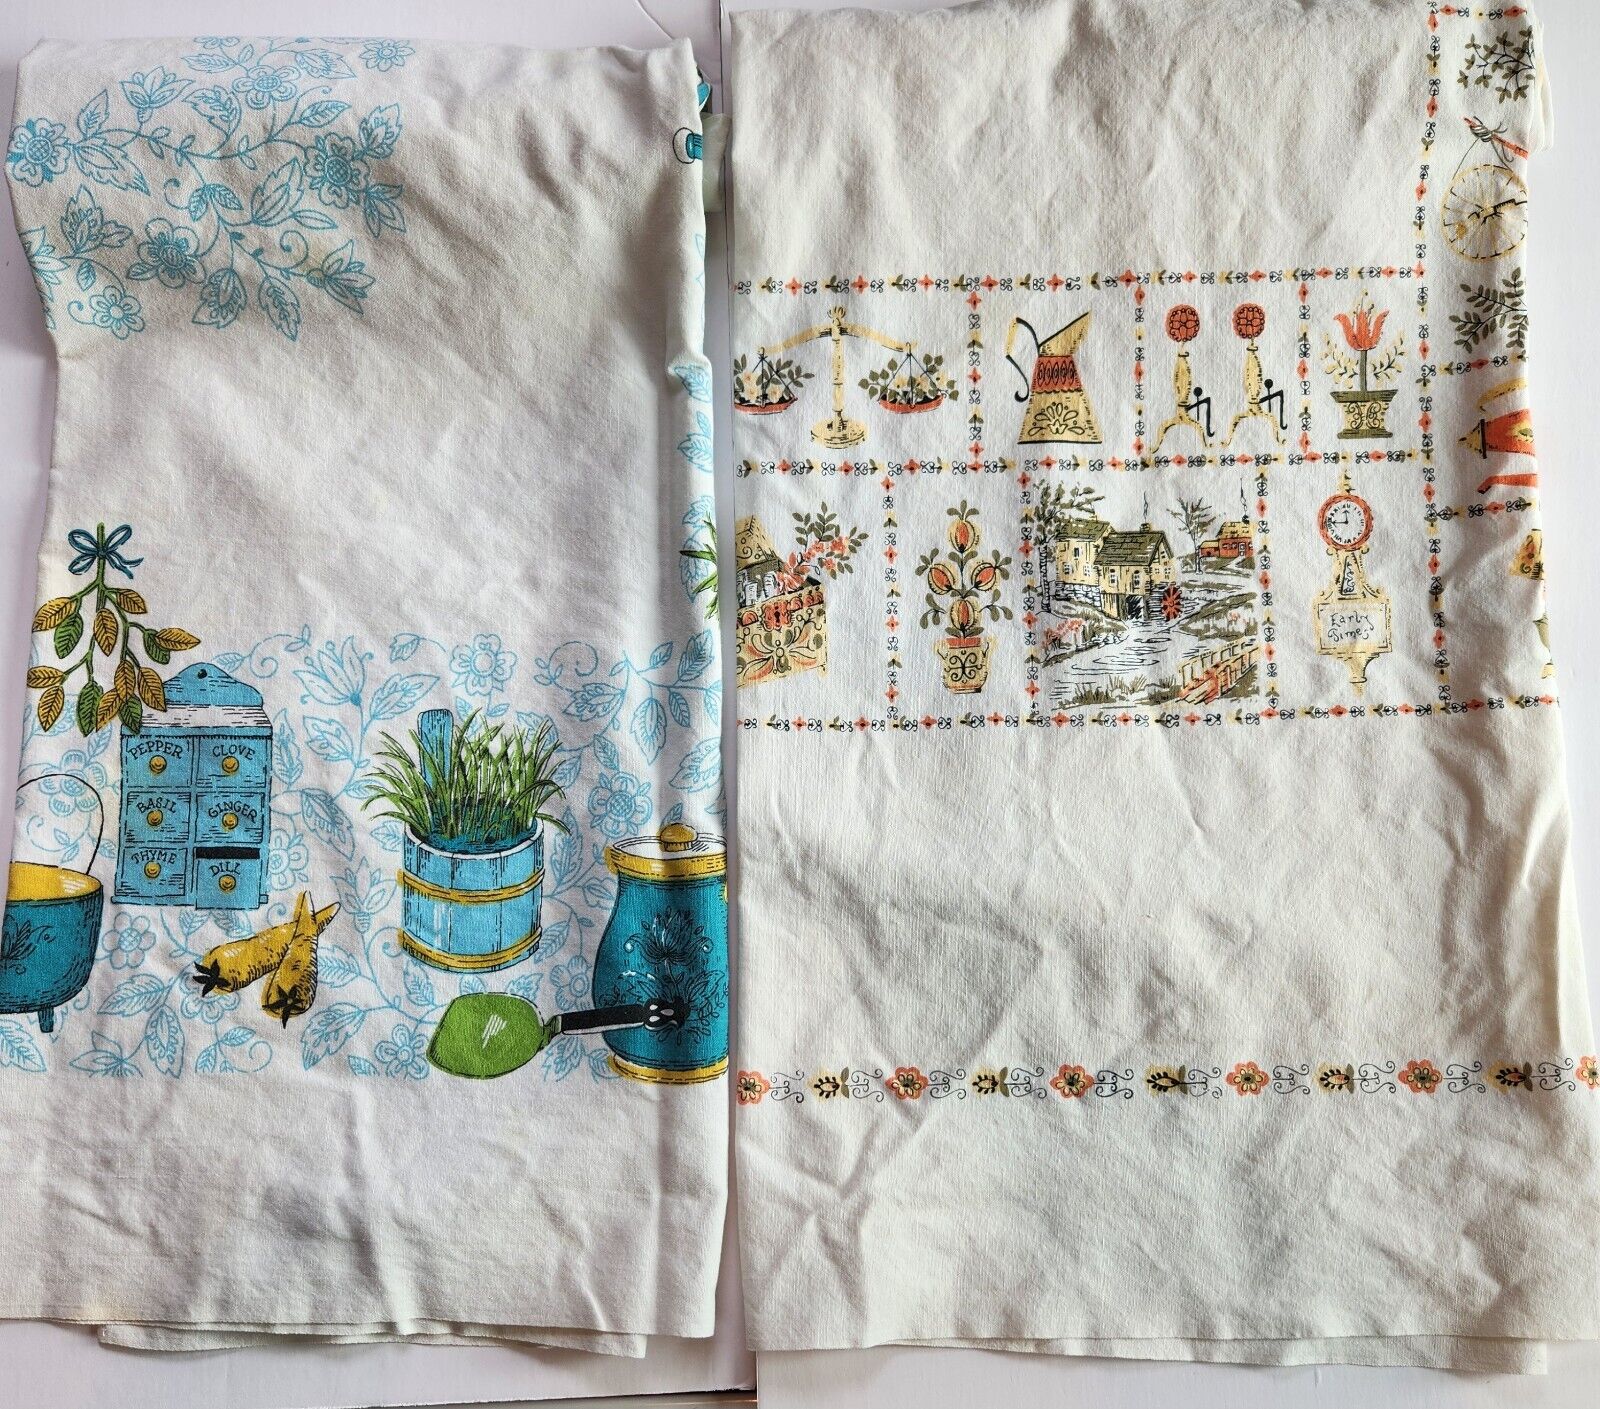 2 Linen Tablecloths Colonial Homestead Prints Aqua Coral Farmhouse Cottagecore 